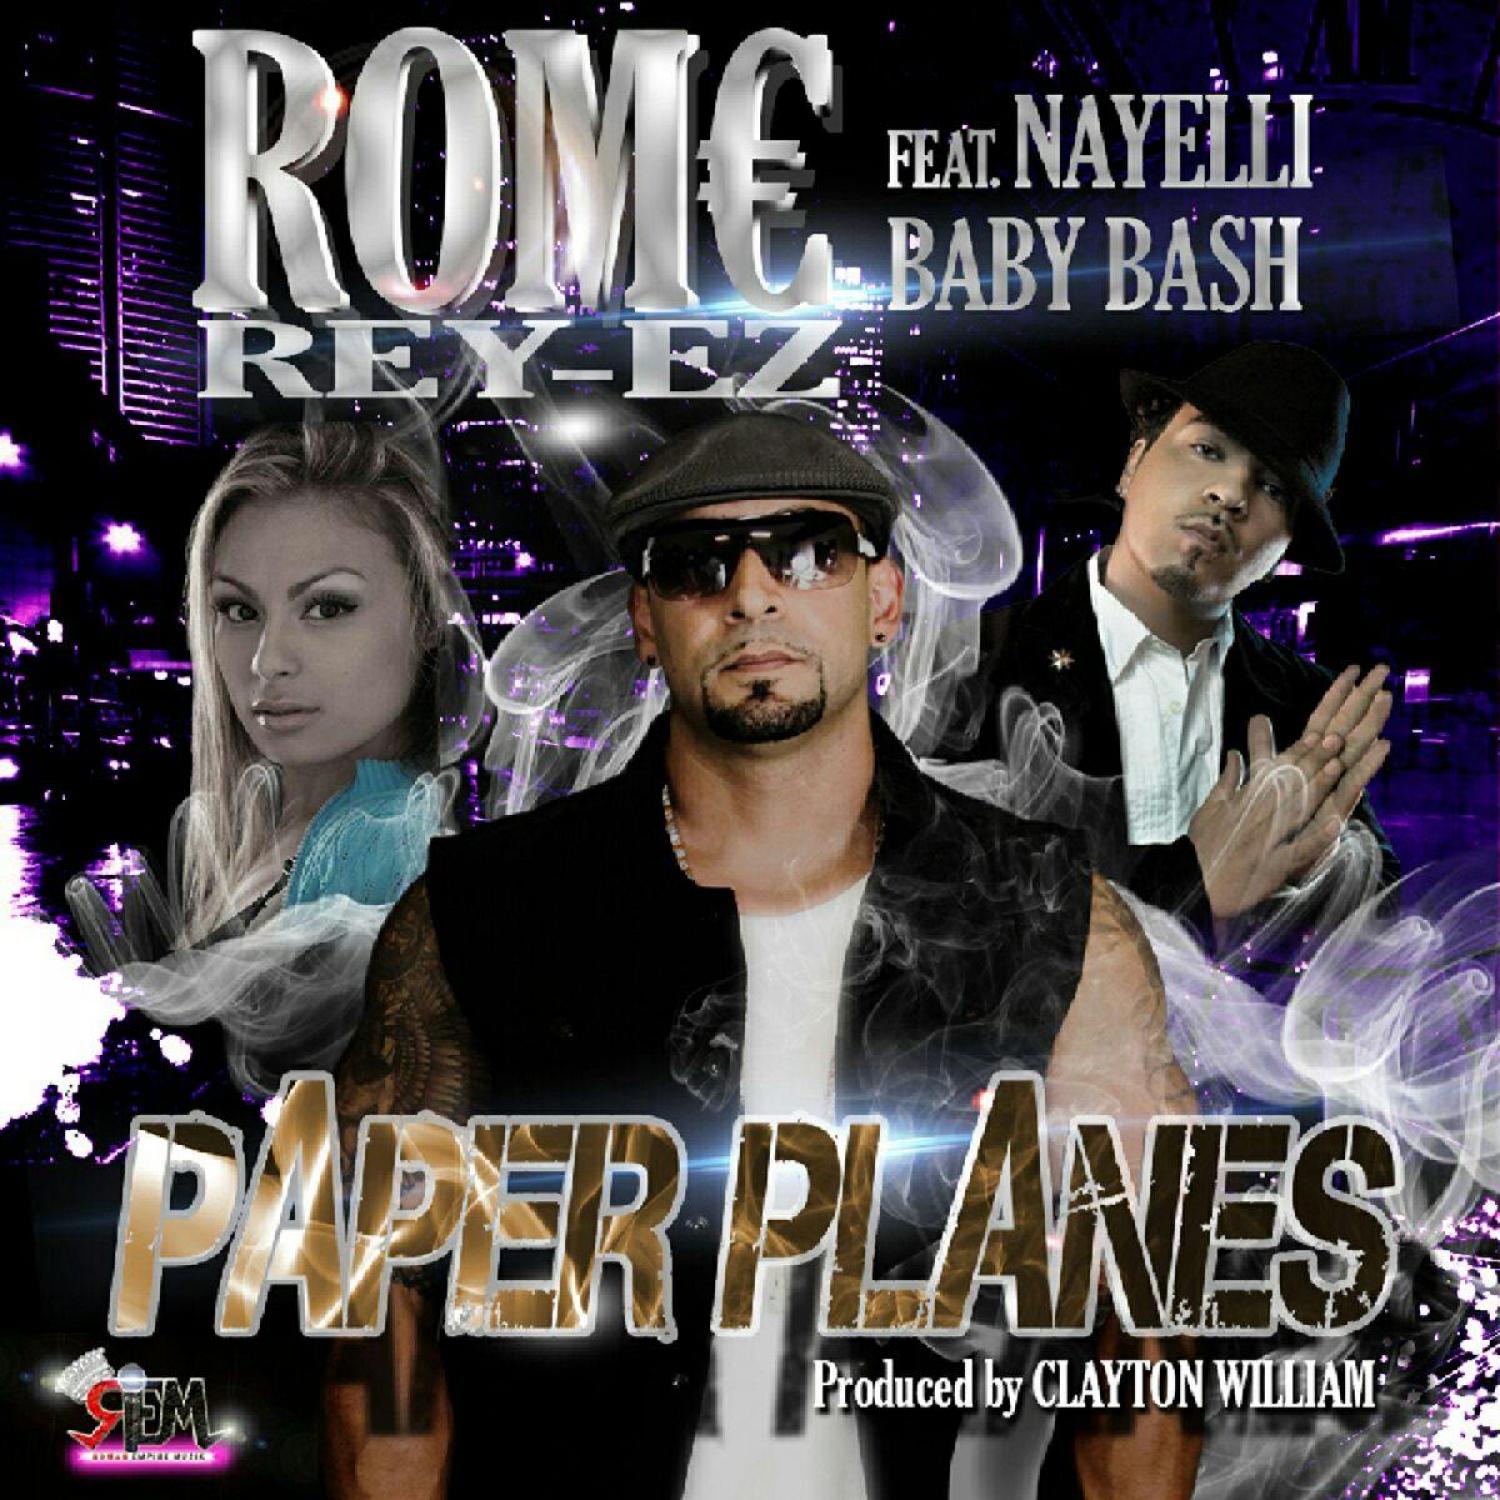 Paper Planes (feat. Nayelli & Baby Bash) - Single